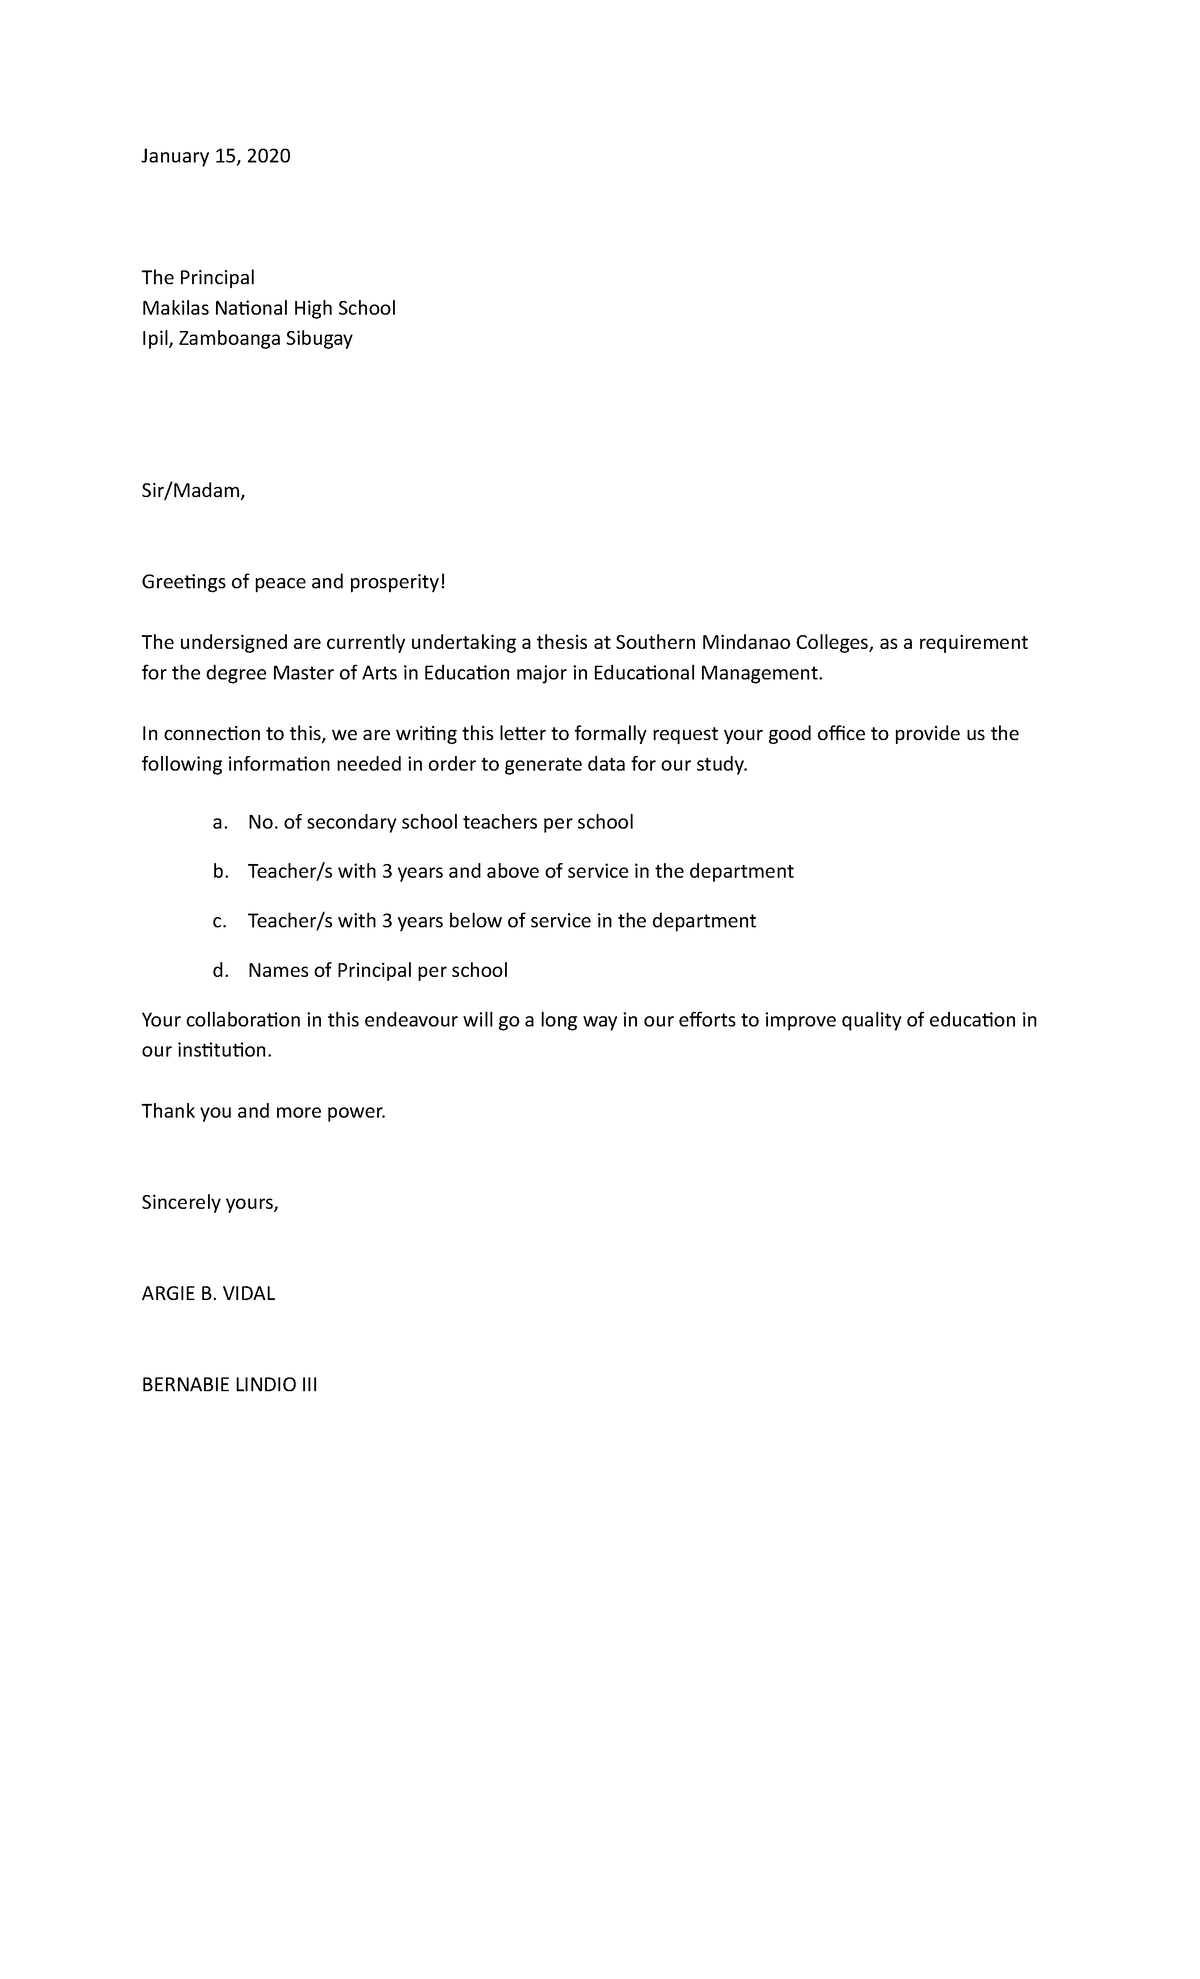 Communication letter - The Principal Makilas National High School Ipil ...